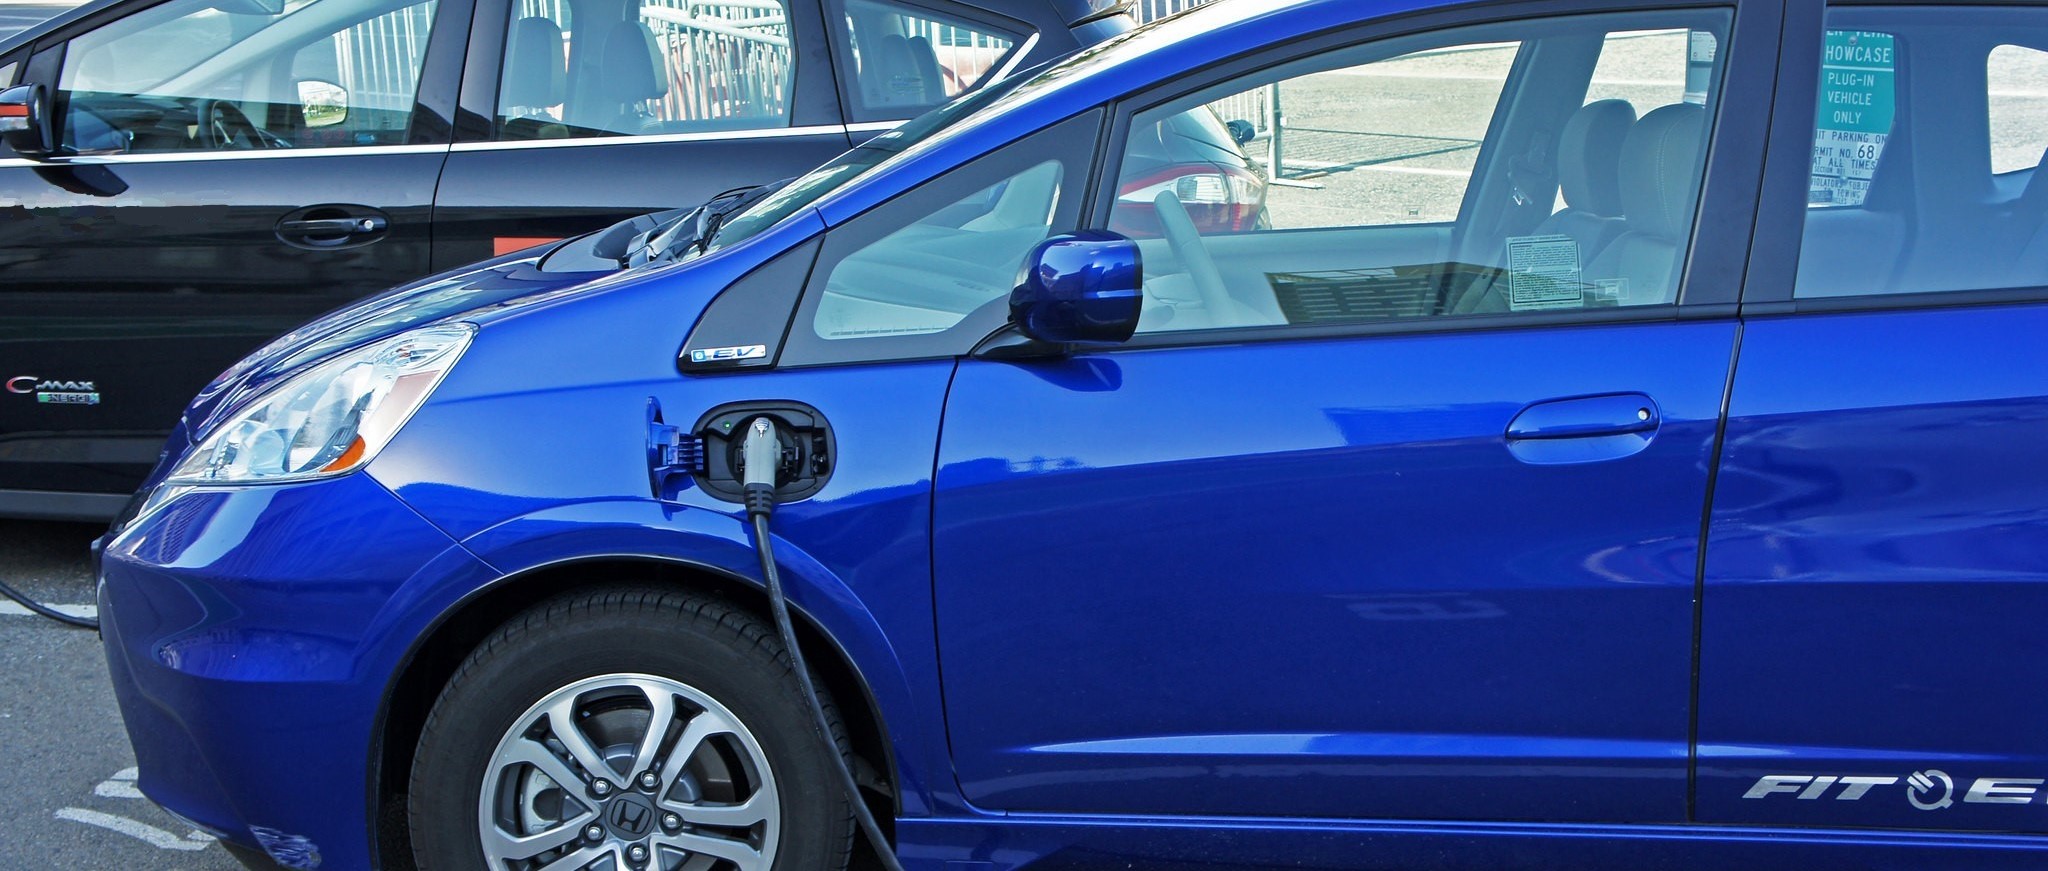 image of blue car charging